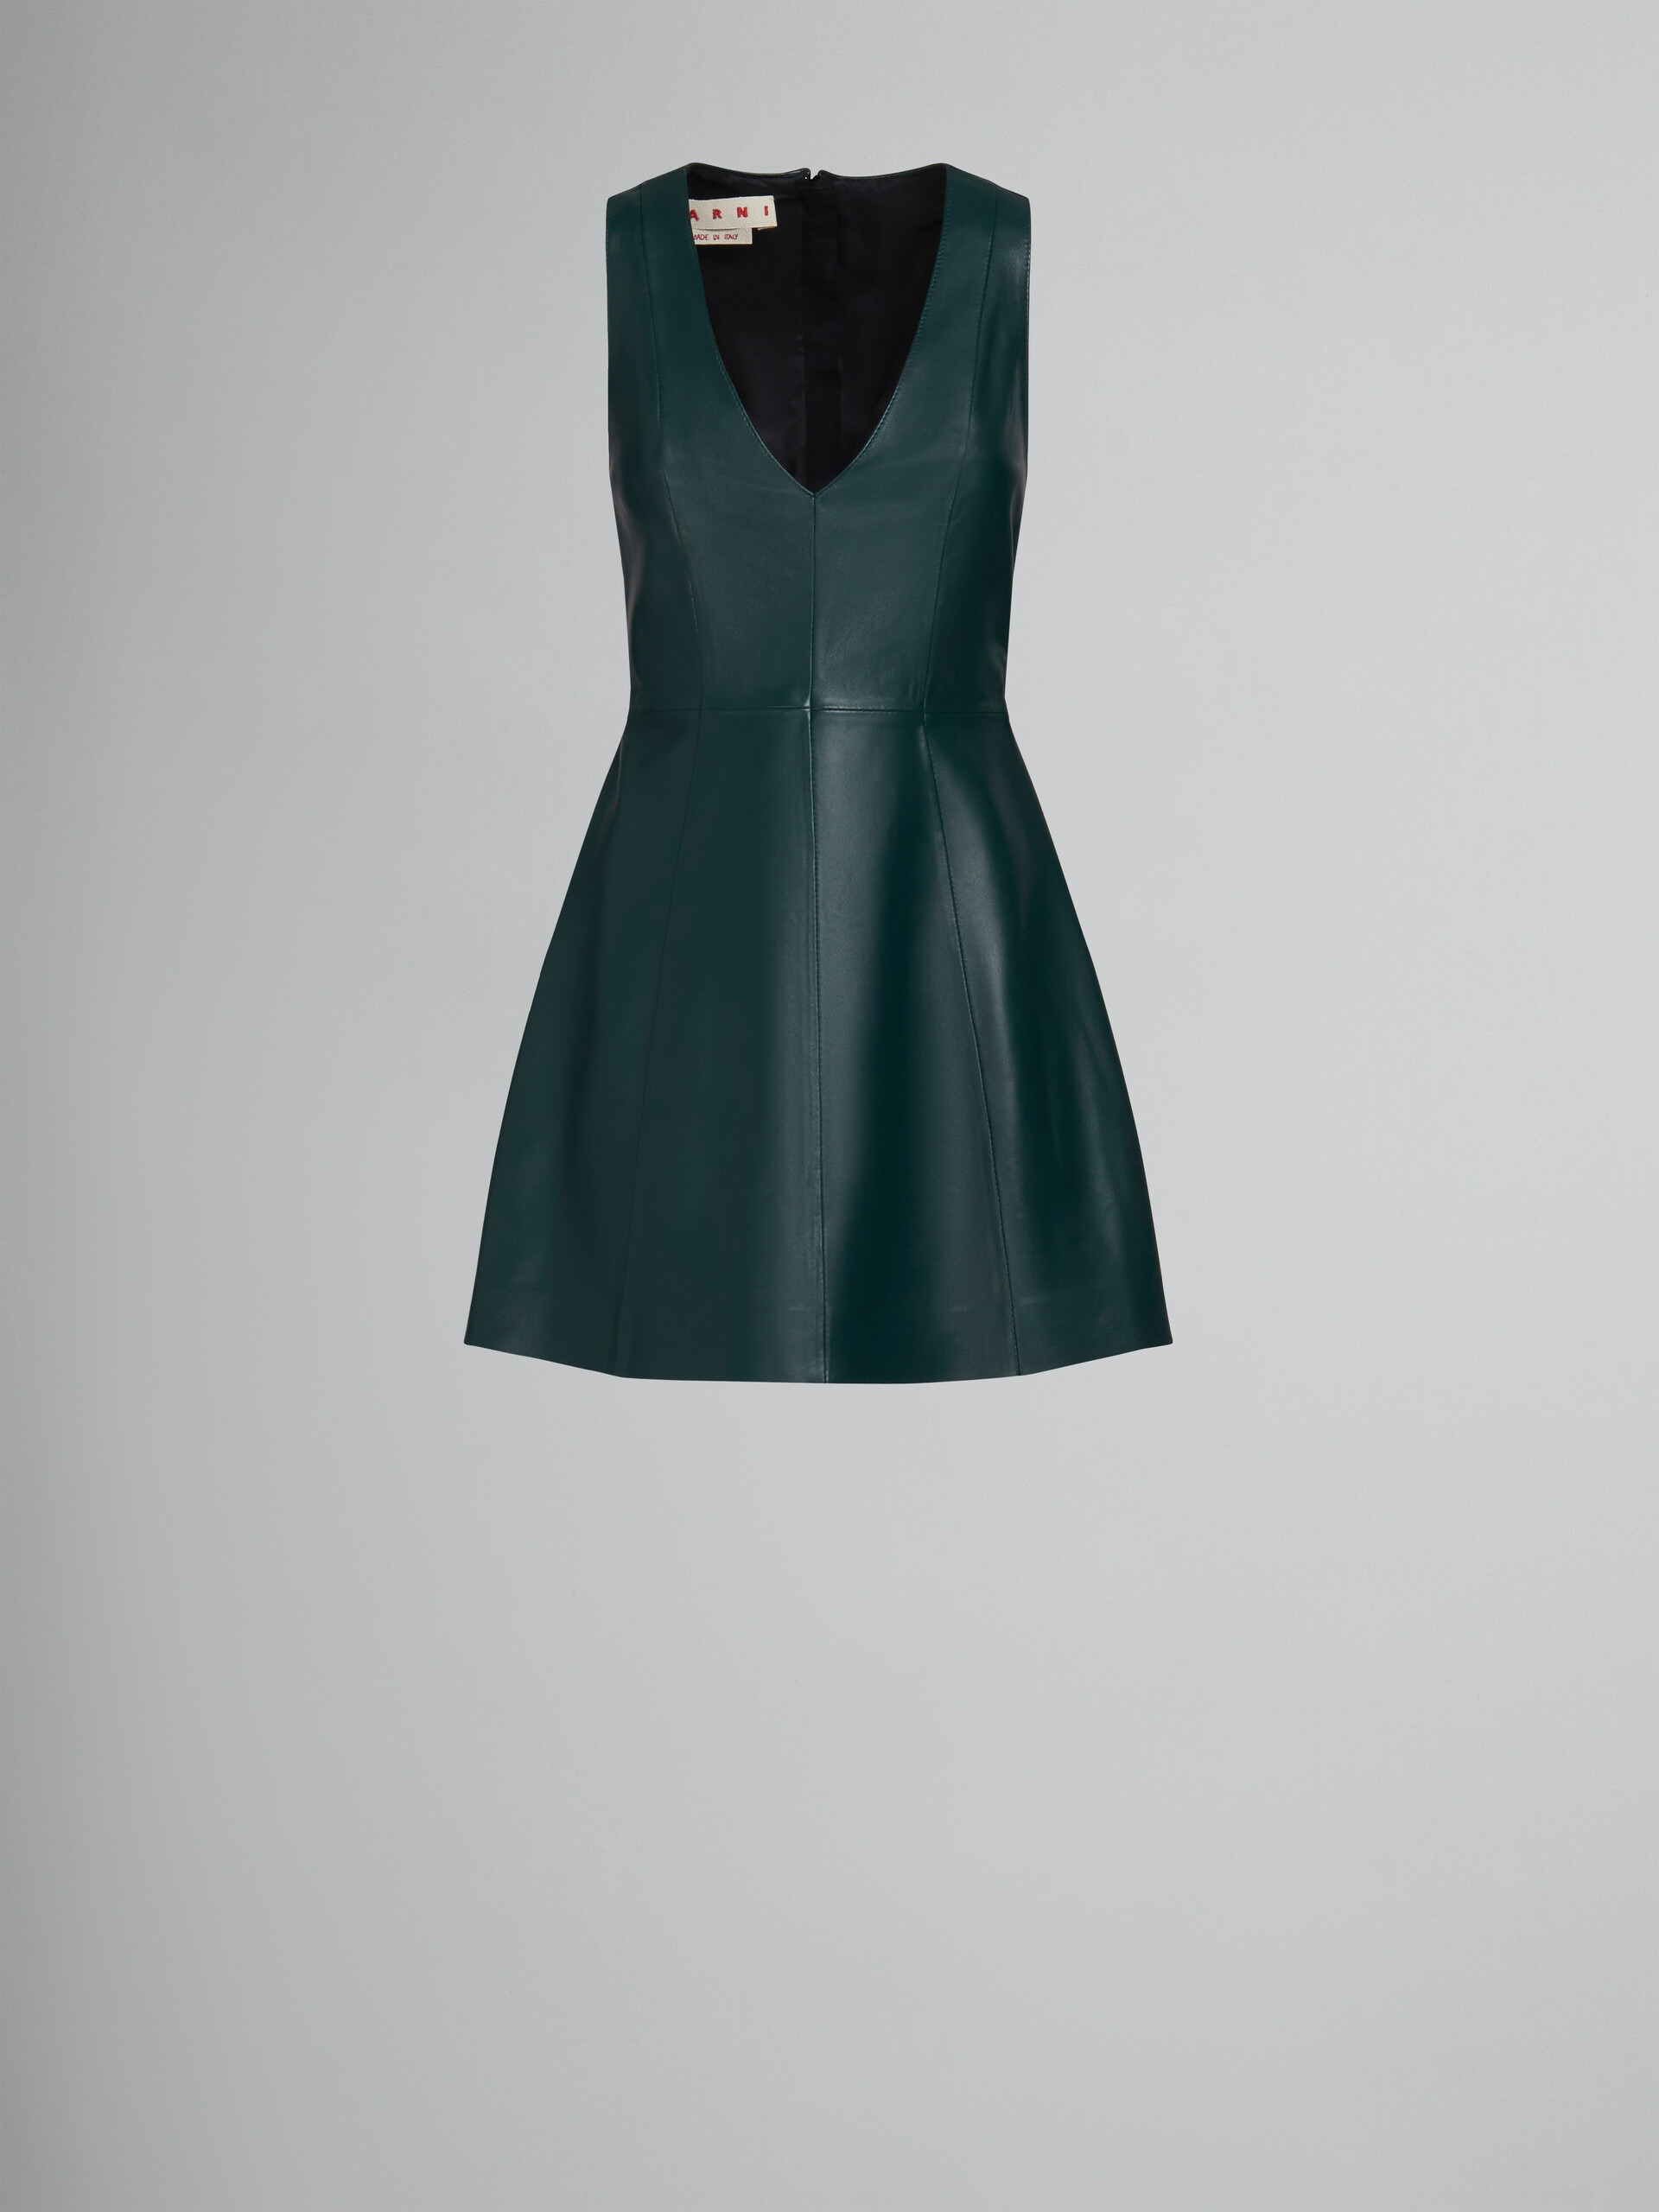 Green leather dress with V-neck - Dresses - Image 1